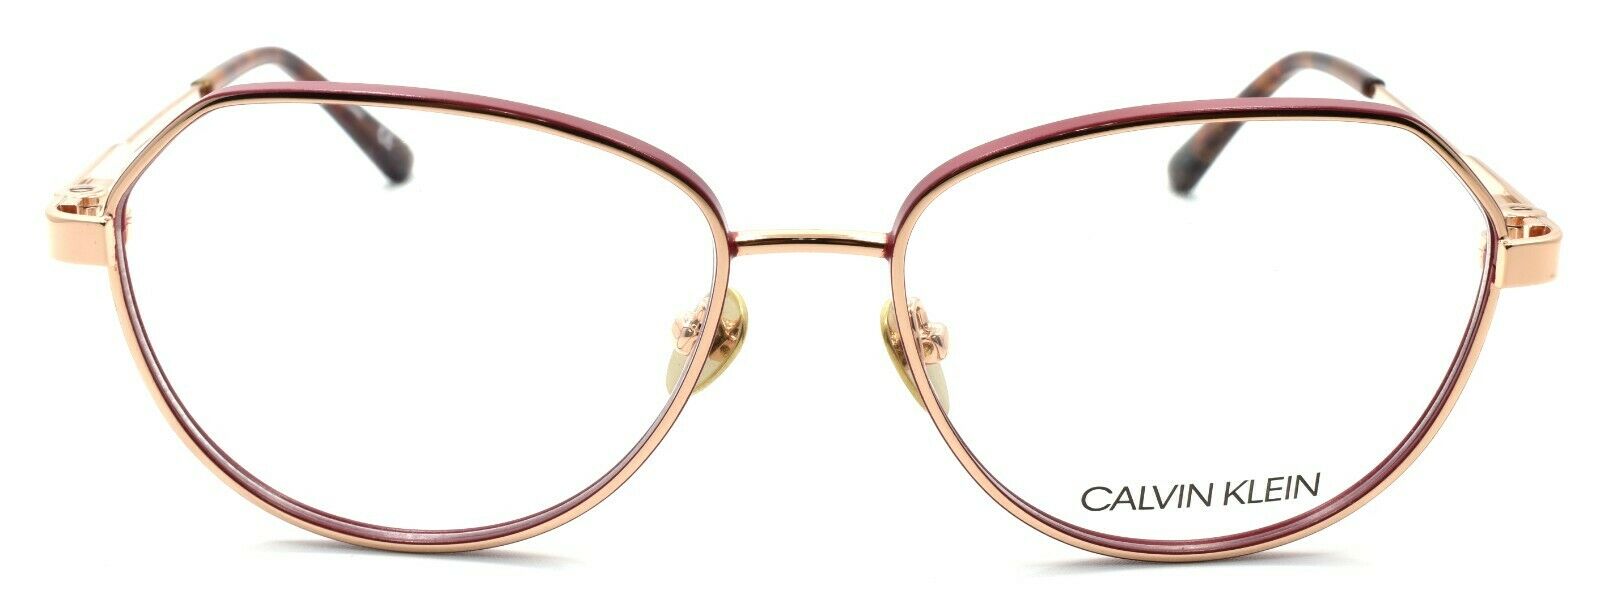 2-Calvin Klein CK19113 780 Women's Eyeglasses Frames 53-15-140 Rose Gold-883901114423-IKSpecs